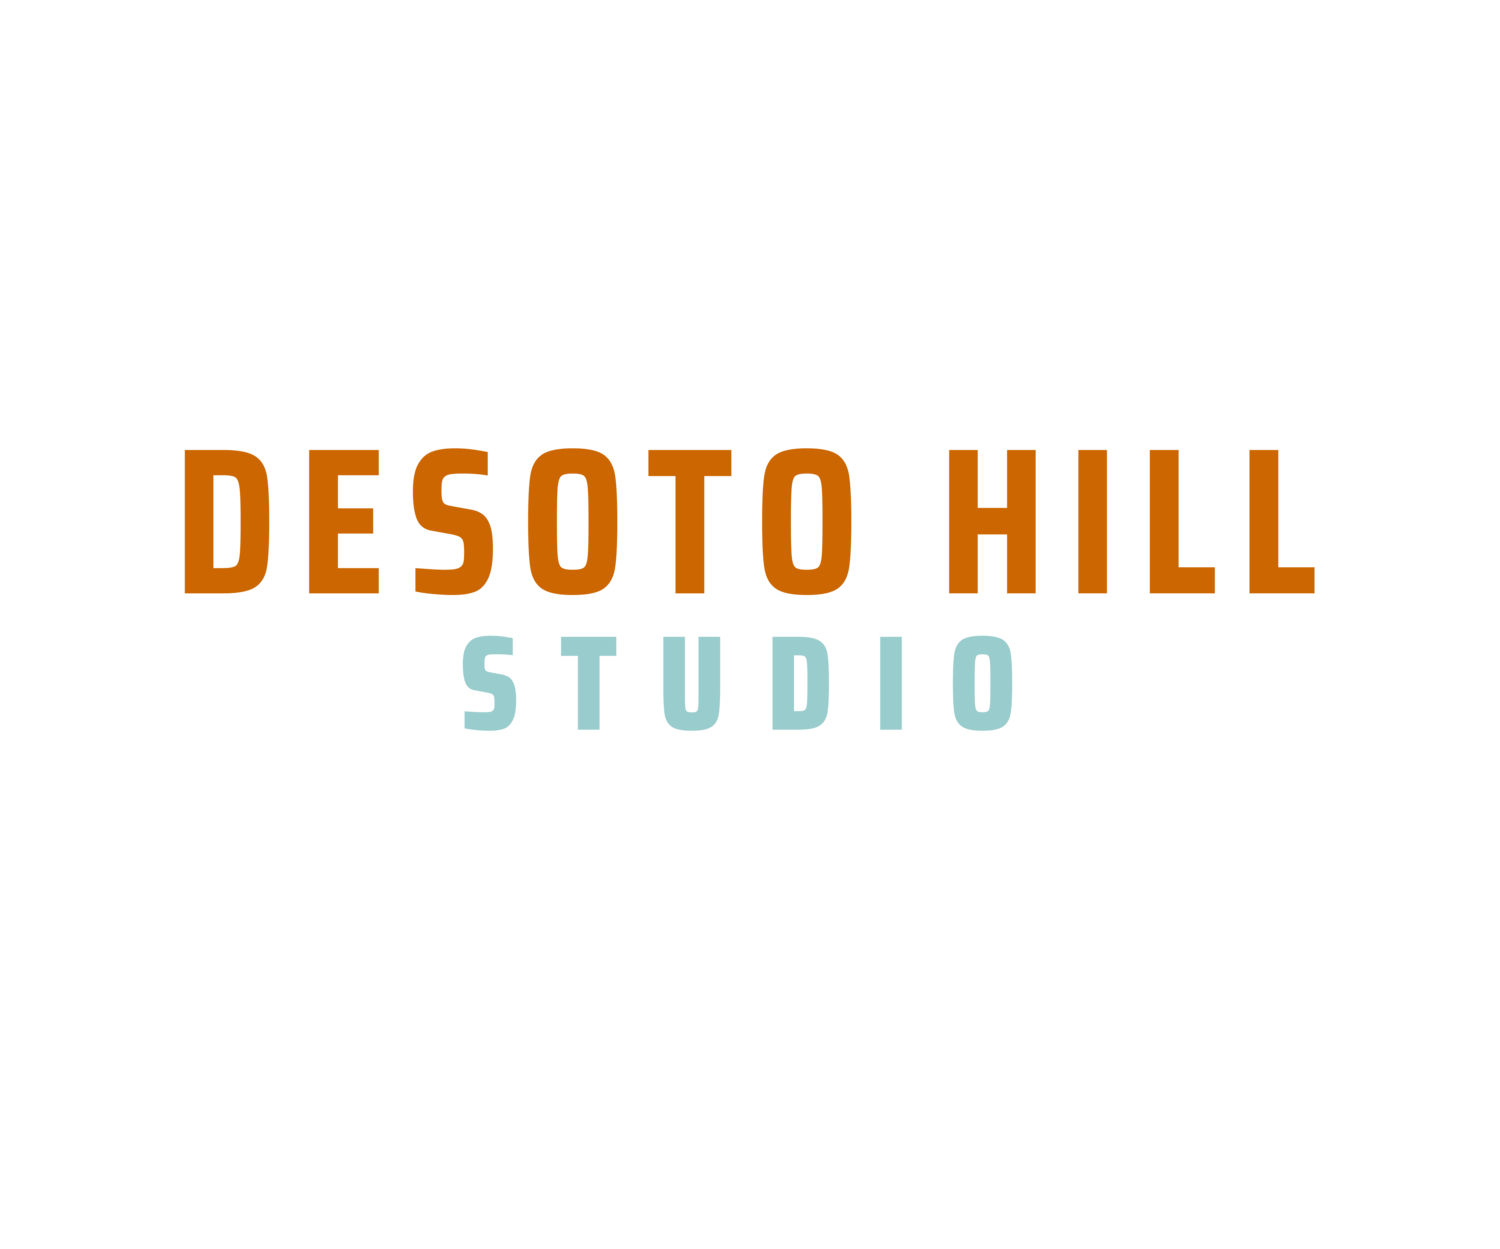 Desoto Hill Studio- Website Design + Video Production 